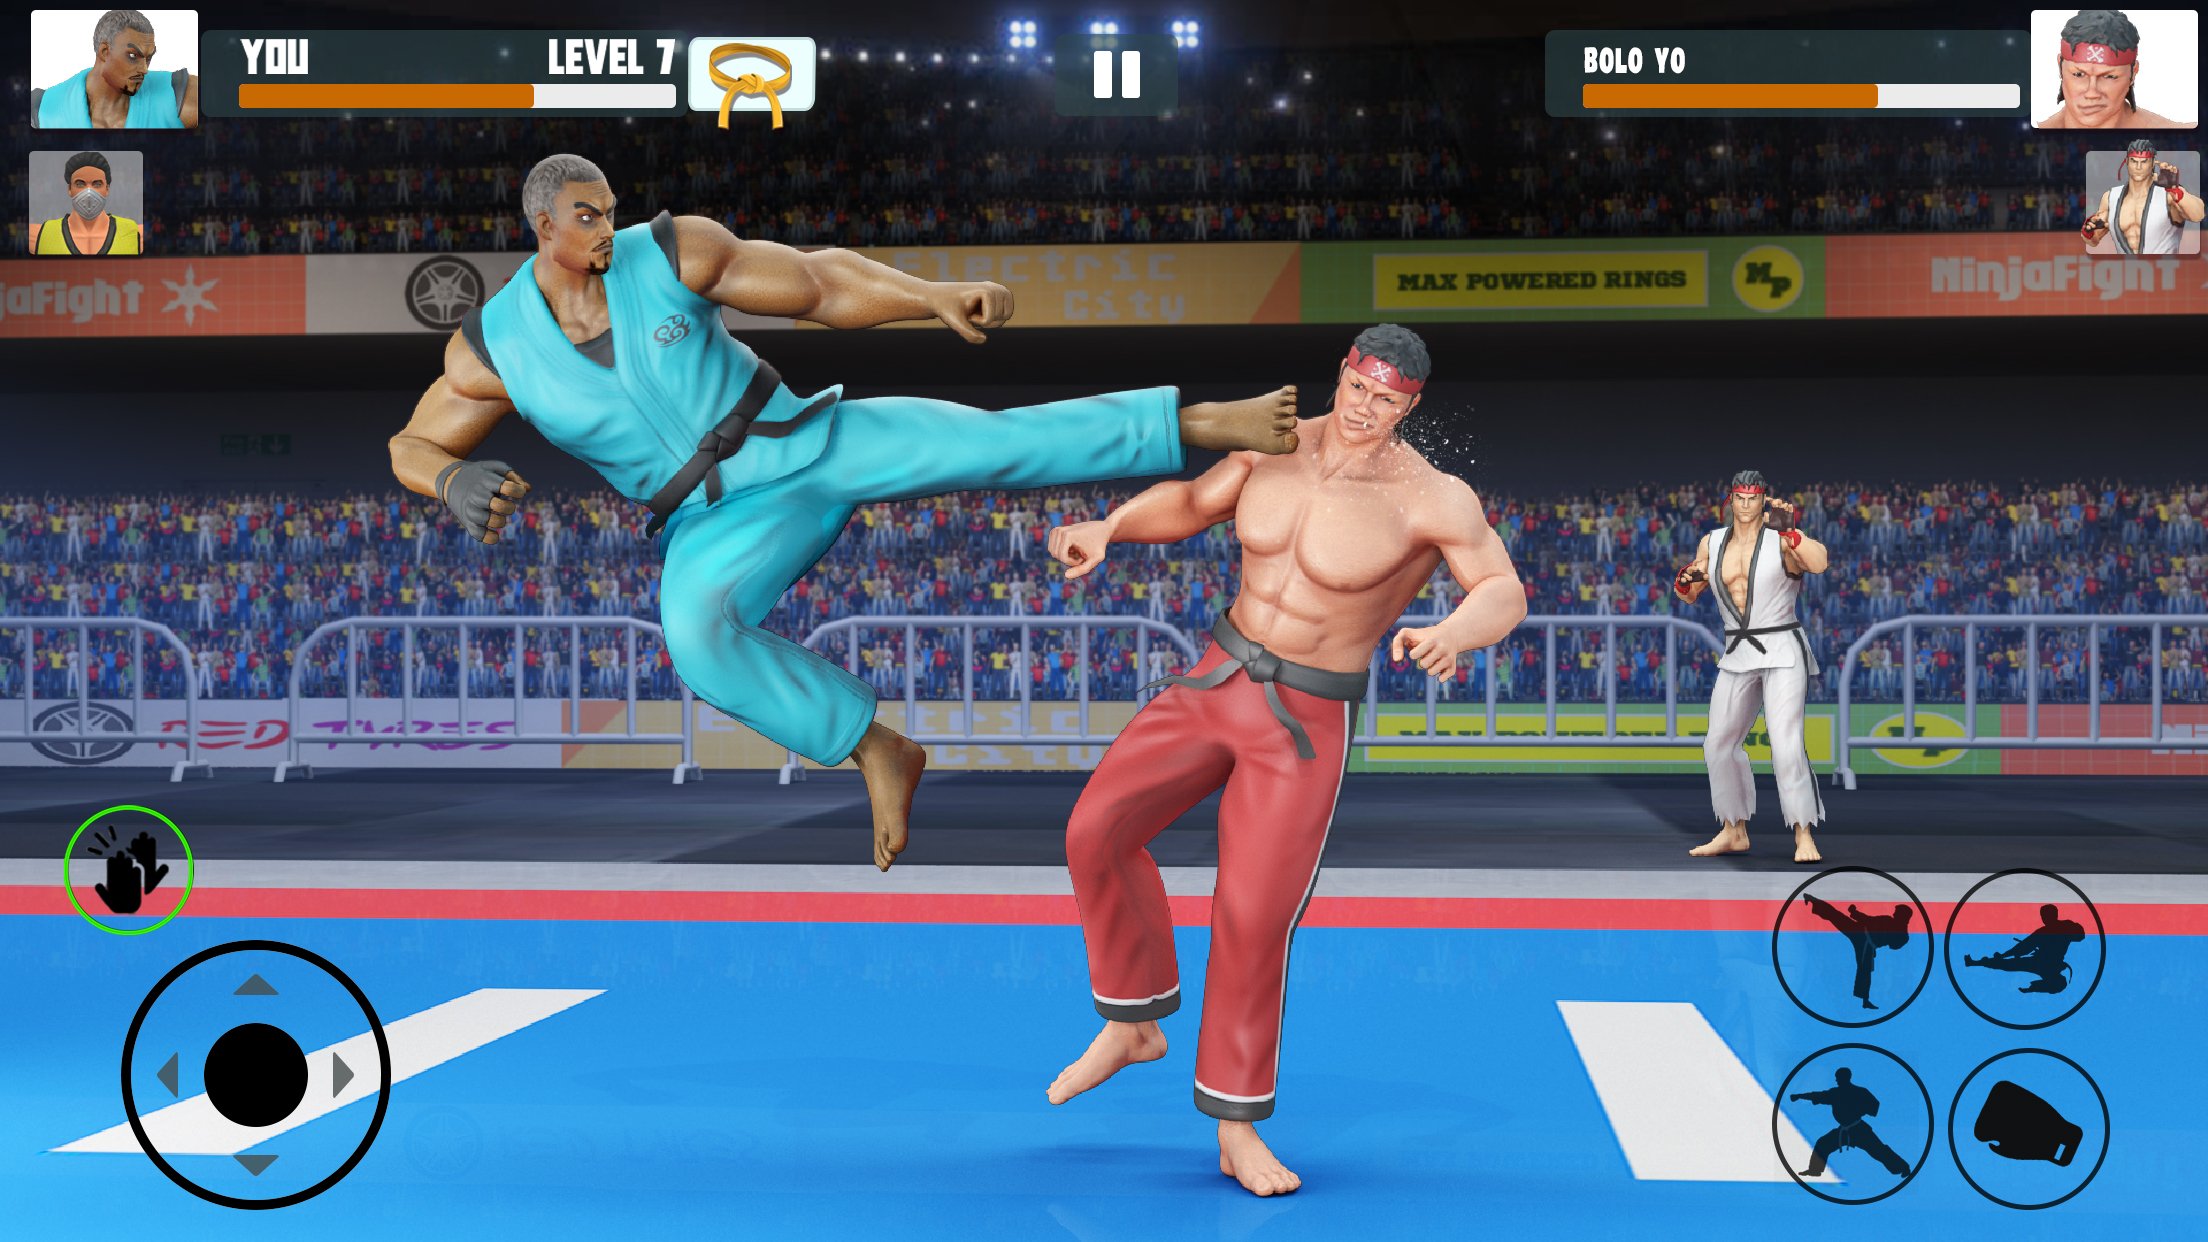 Karate Fighter screen 2